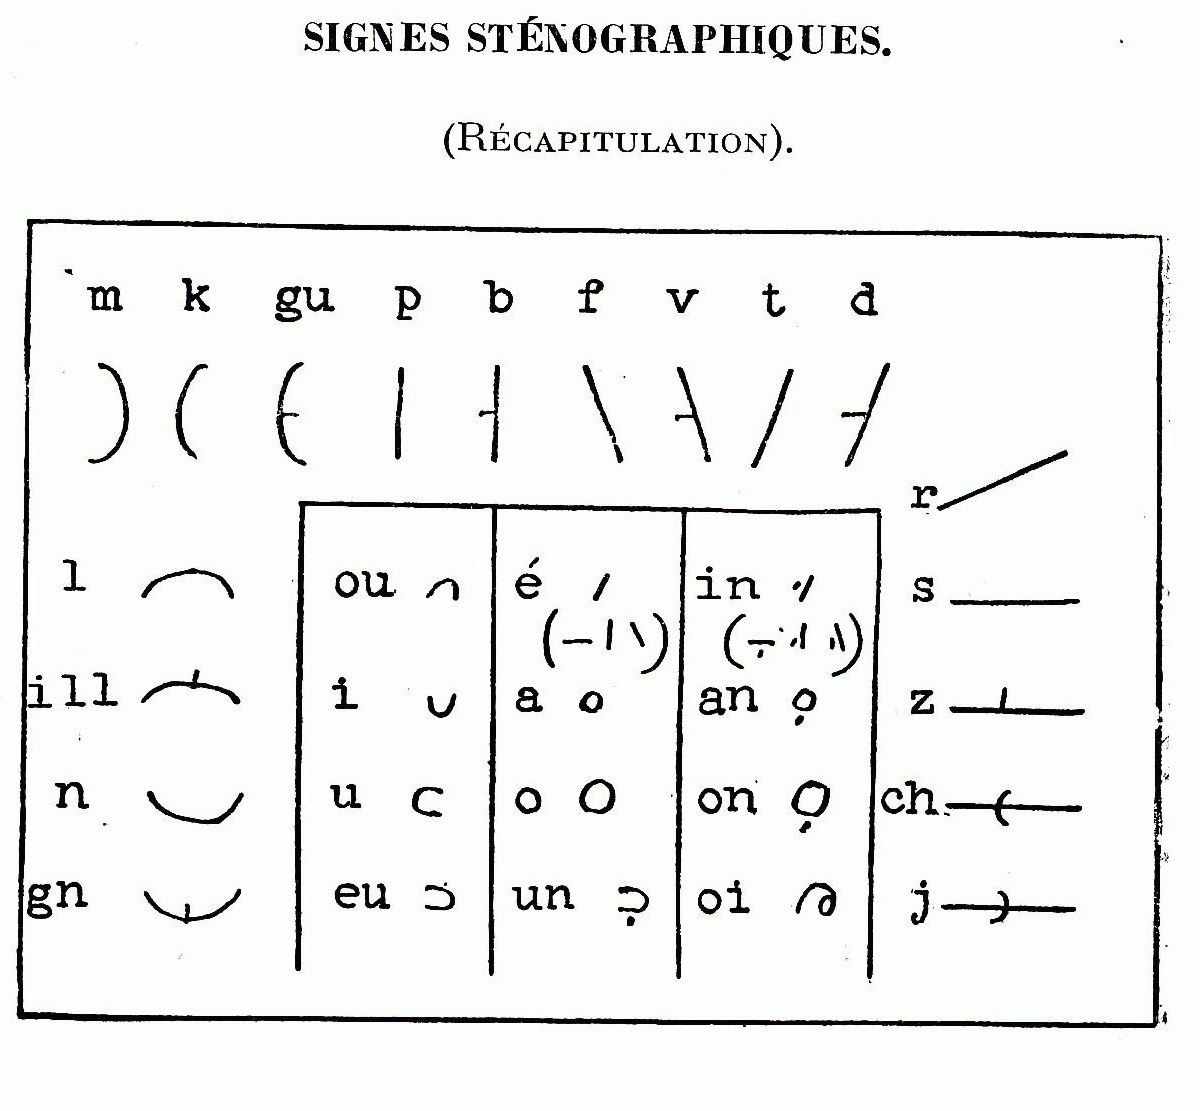 comment apprendre la stenographie